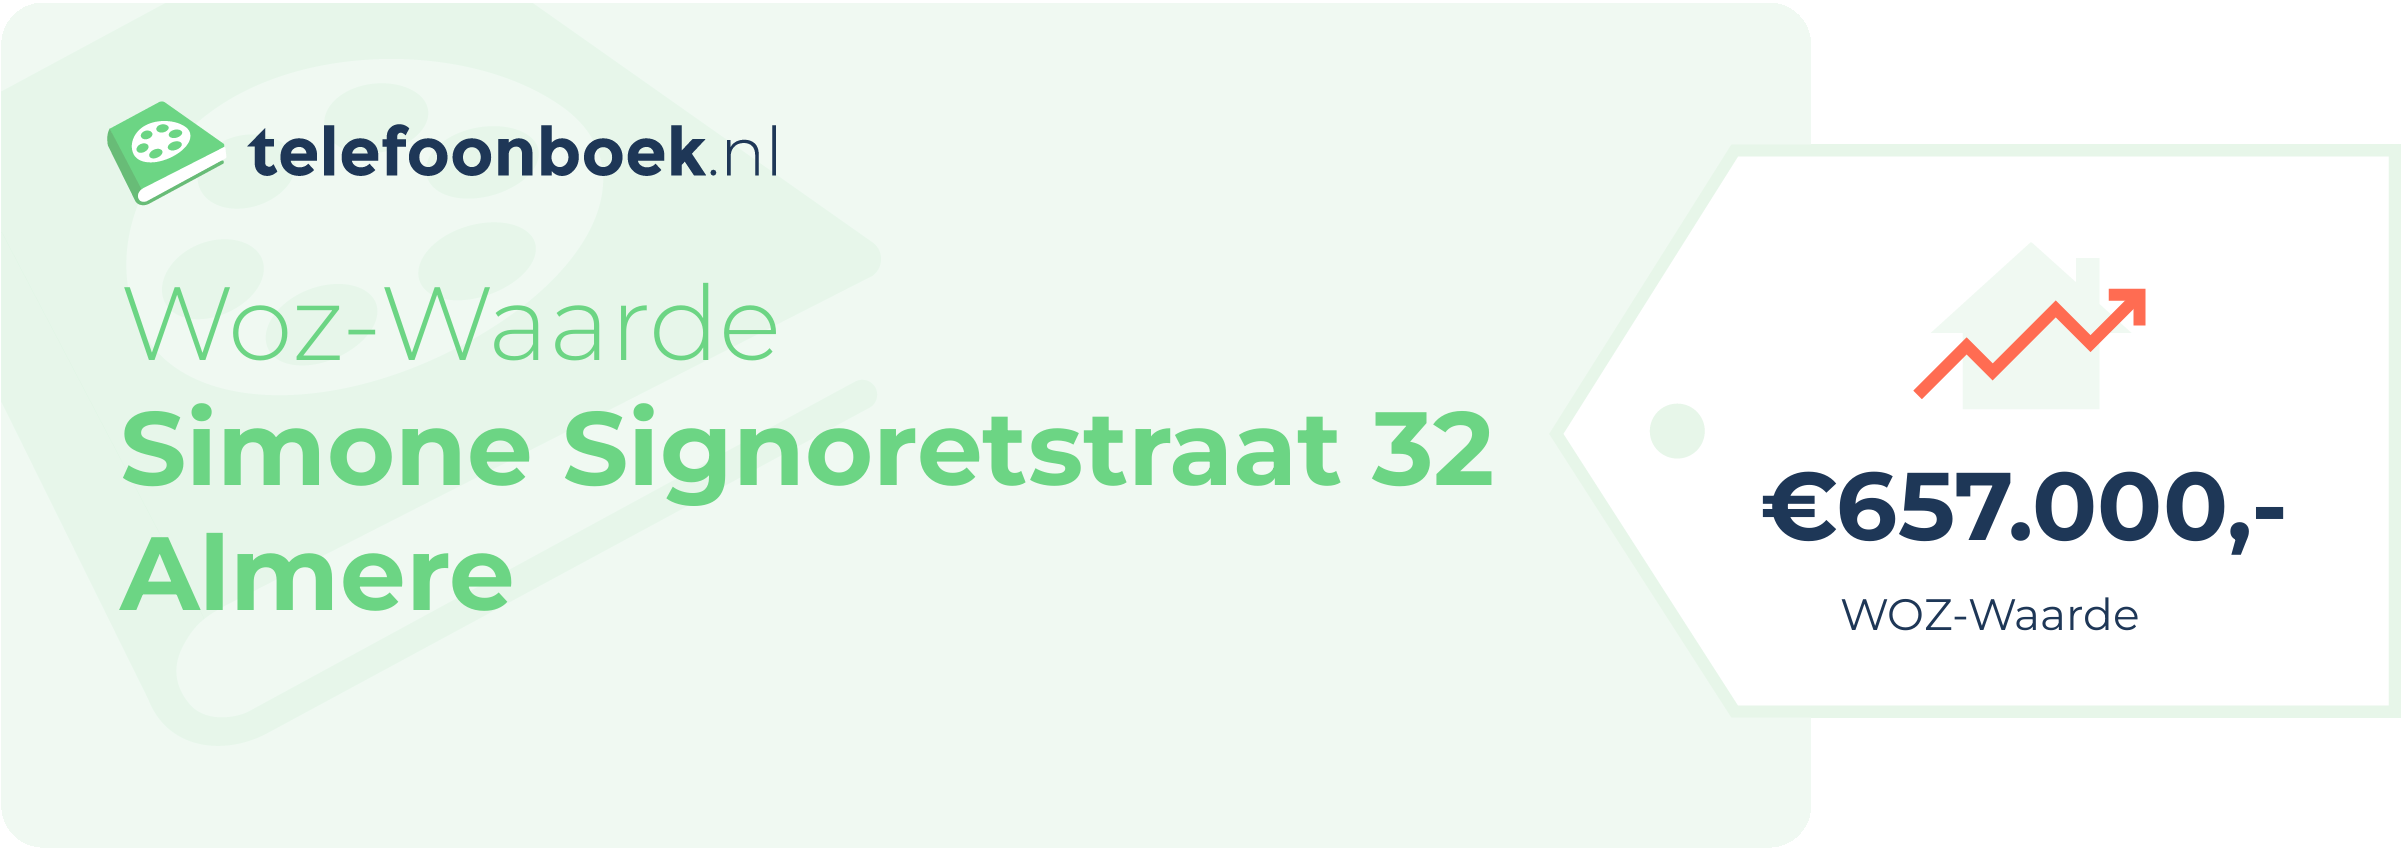 WOZ-waarde Simone Signoretstraat 32 Almere